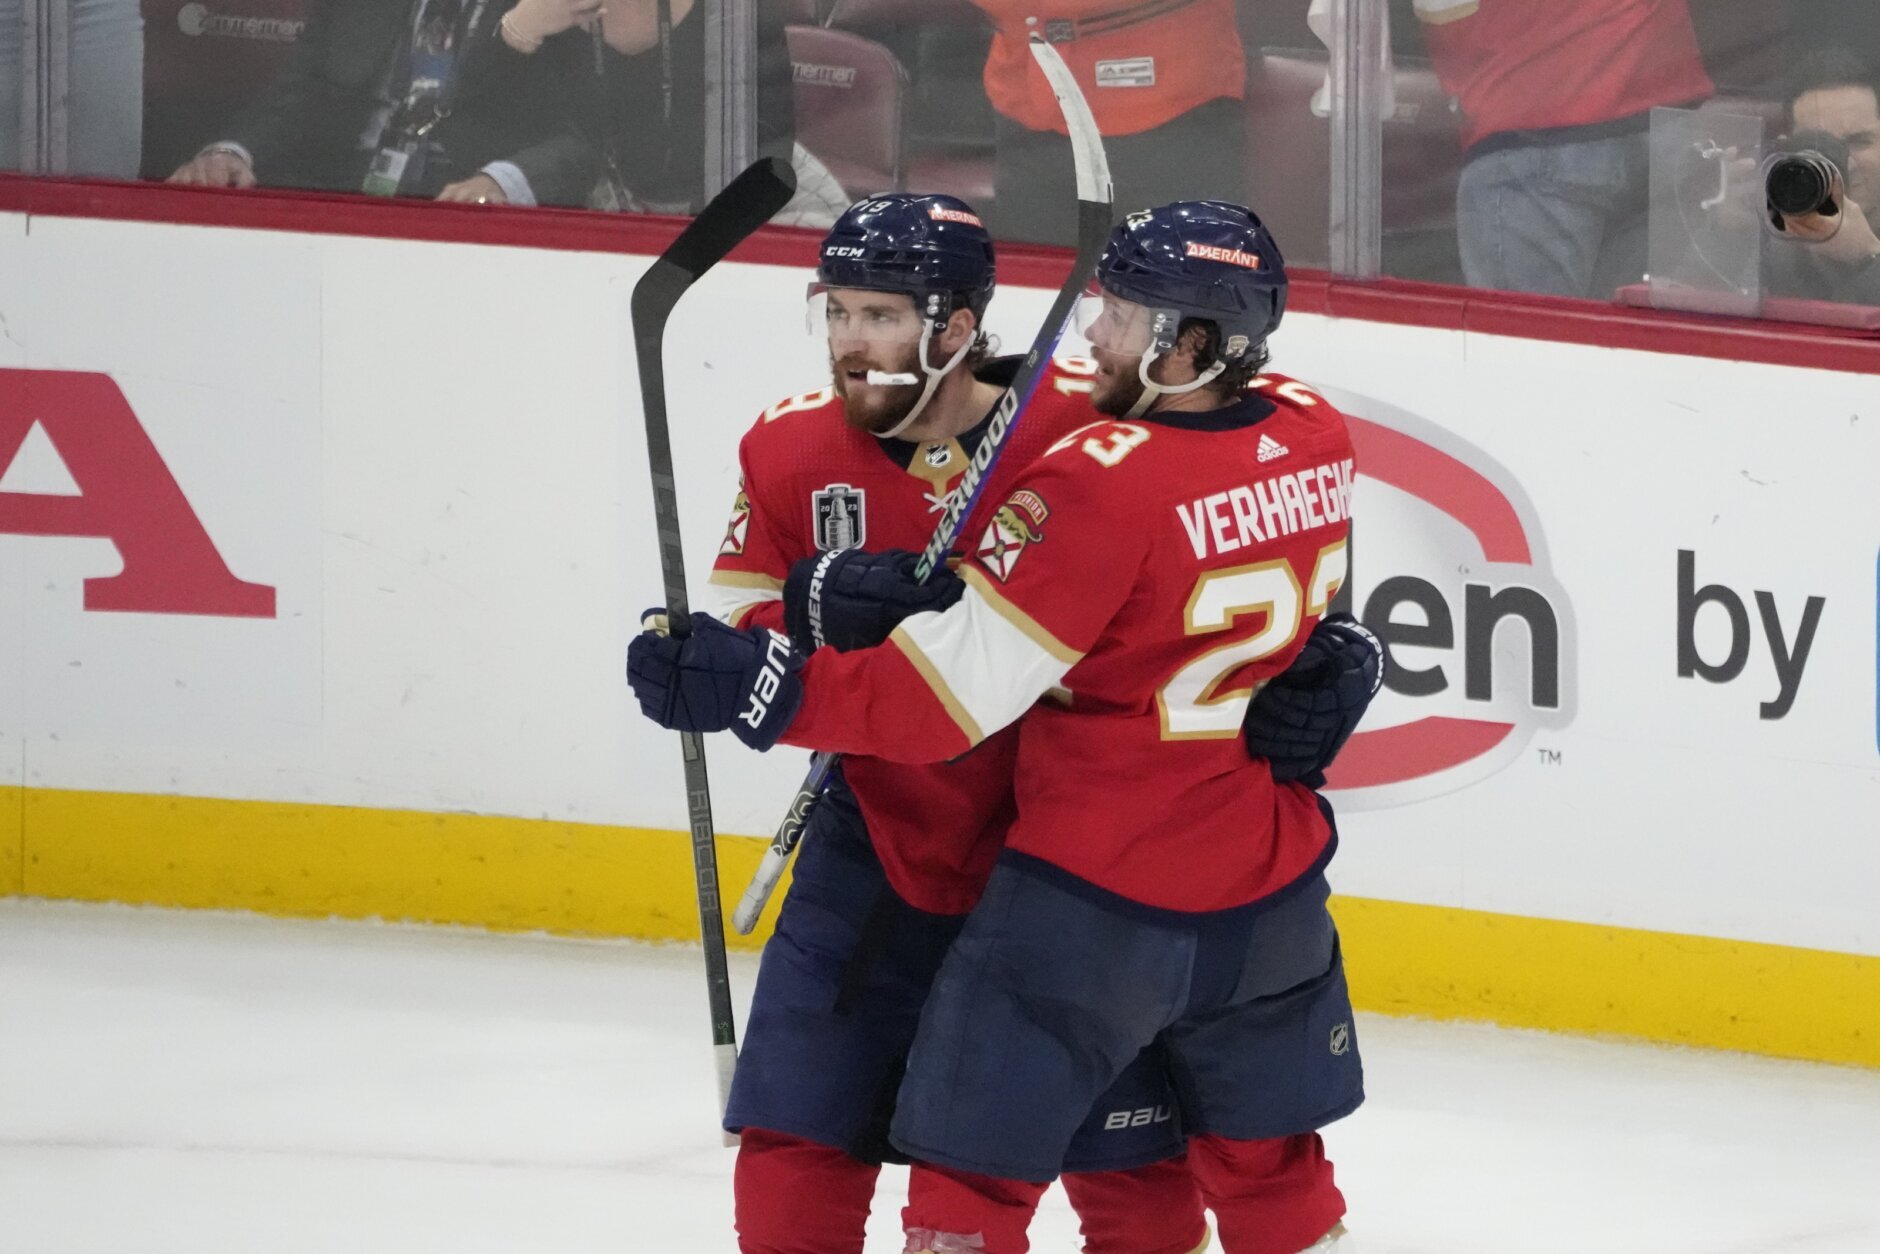 Stanley Cup Final: Matthew Tkachuk rallies Panthers vs. Golden Knights